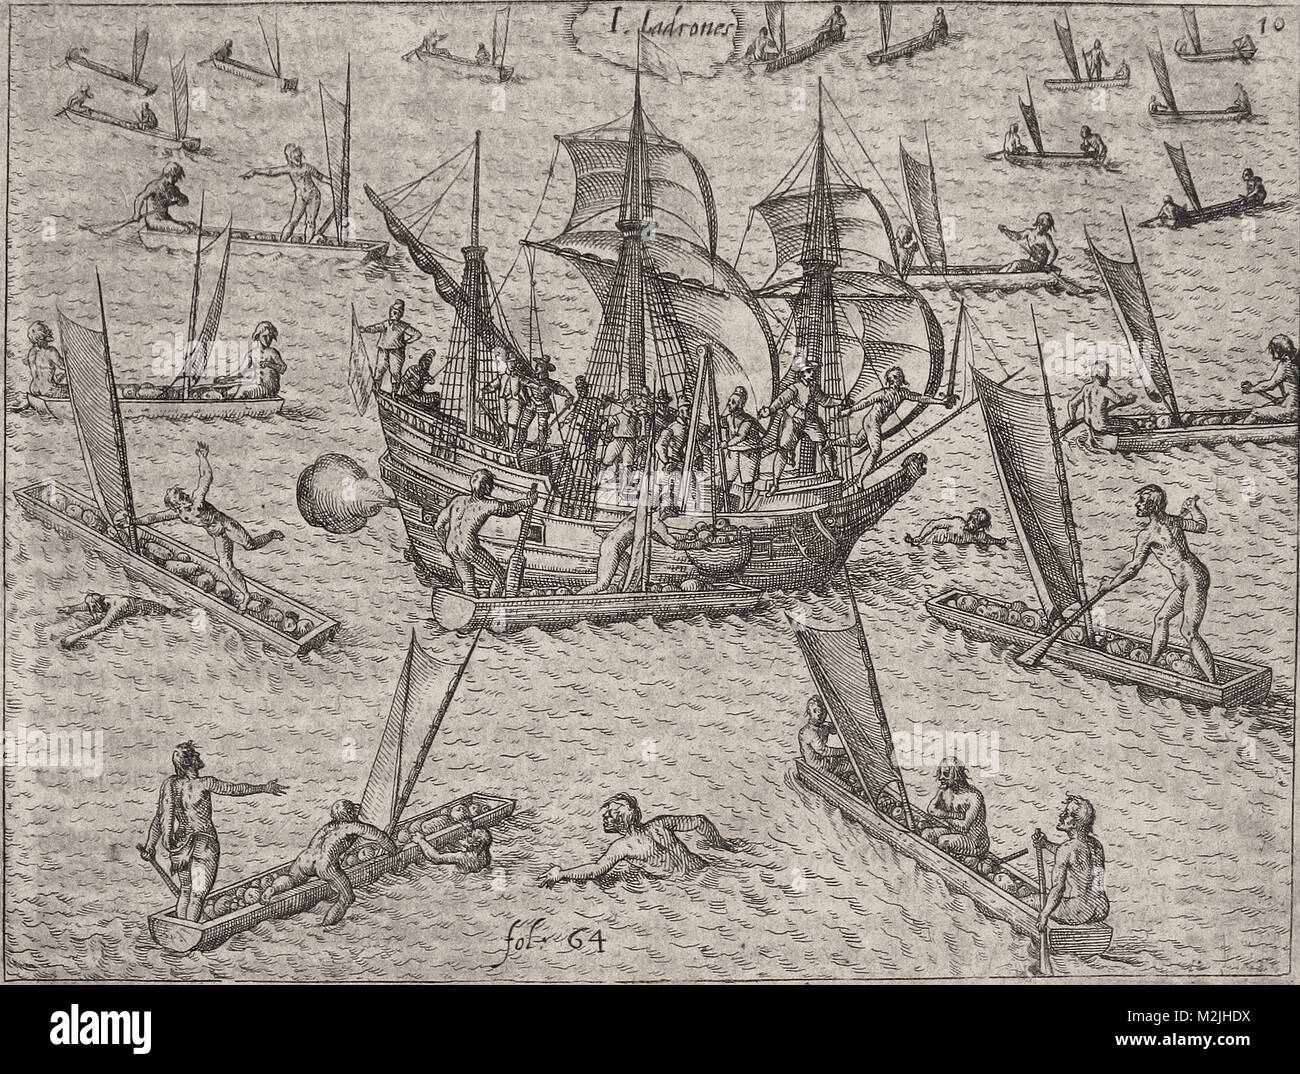 Theodor de Bry - Ladrones Island - Natives attacks an occidental boat Stock Photo